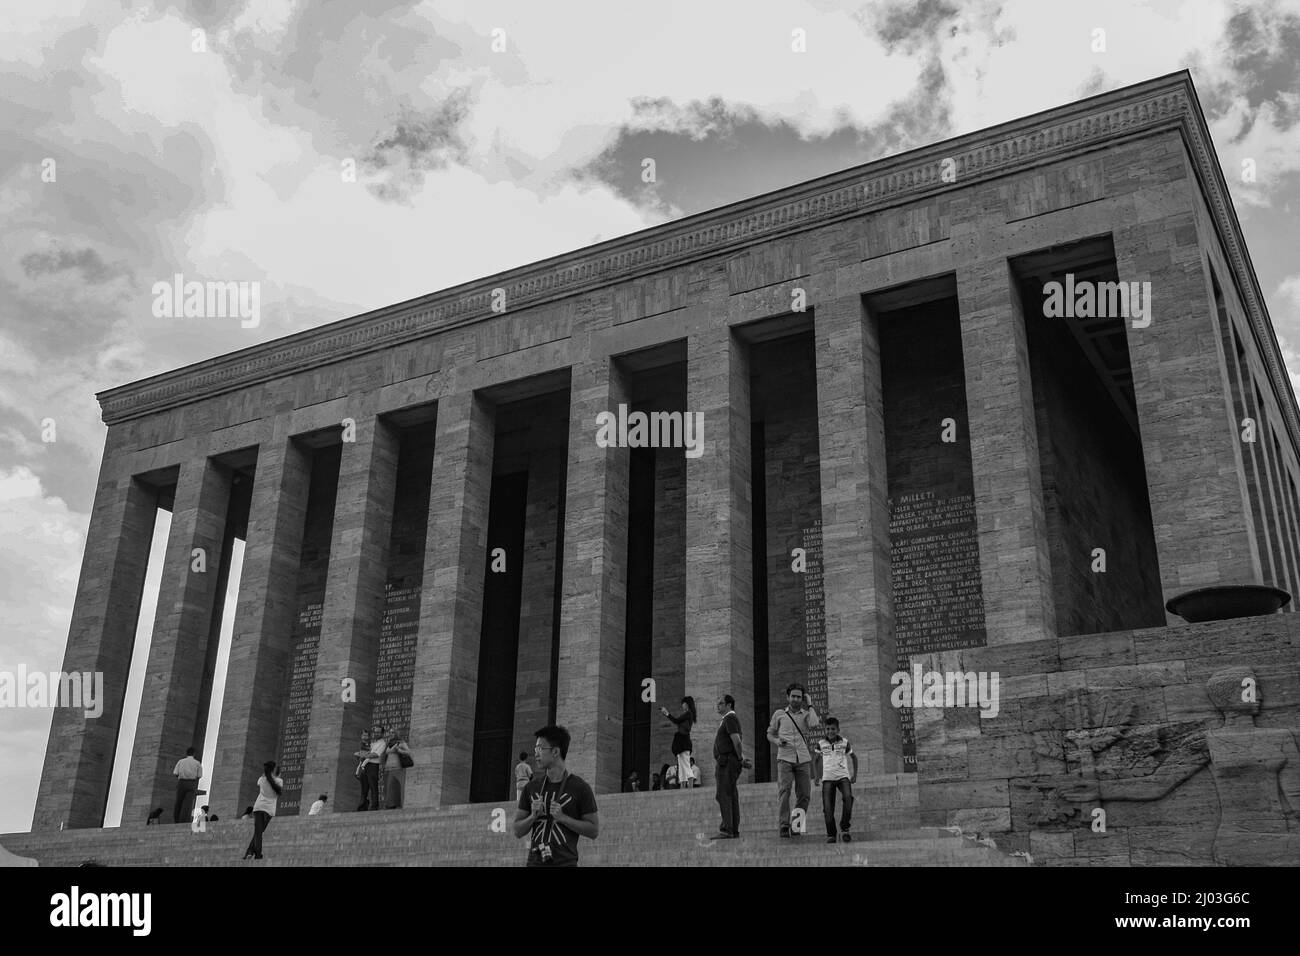 Grayscale low angle shot of the Anitkabir mausoleum of Mustafa Kemal Ataturk in Ankara, Turkey Stock Photo